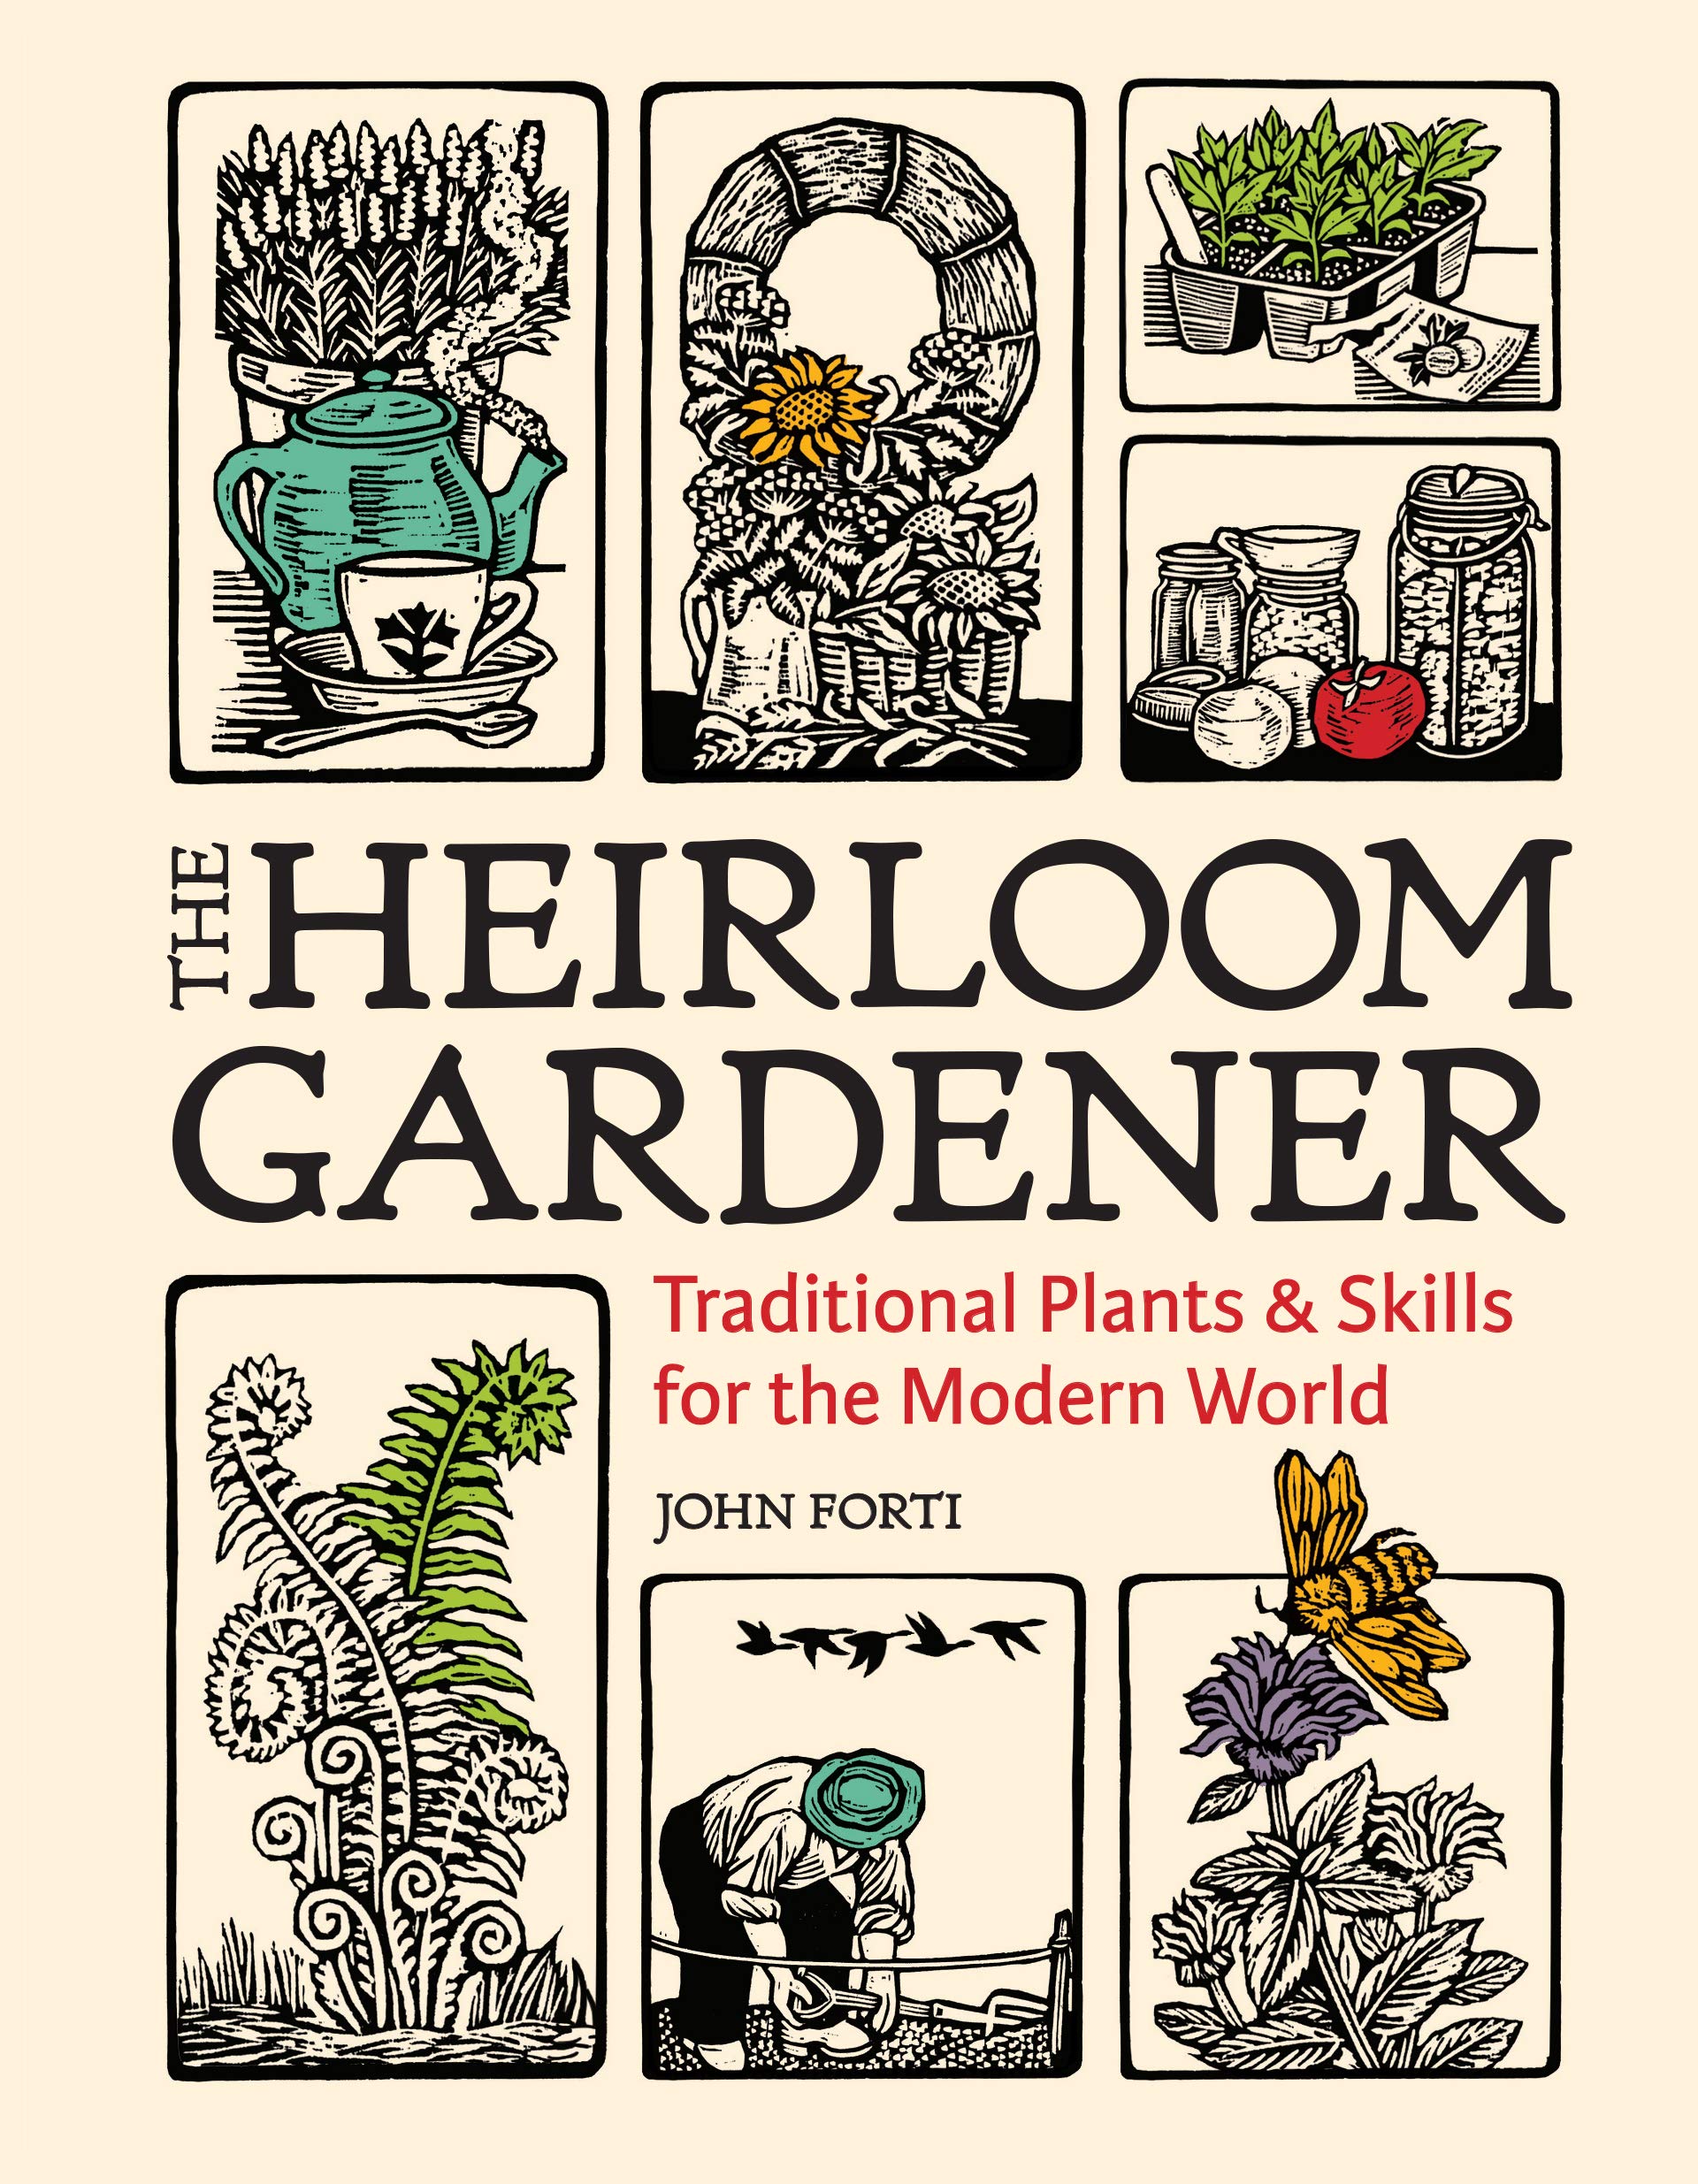 Heirloom Gardener Book Cover